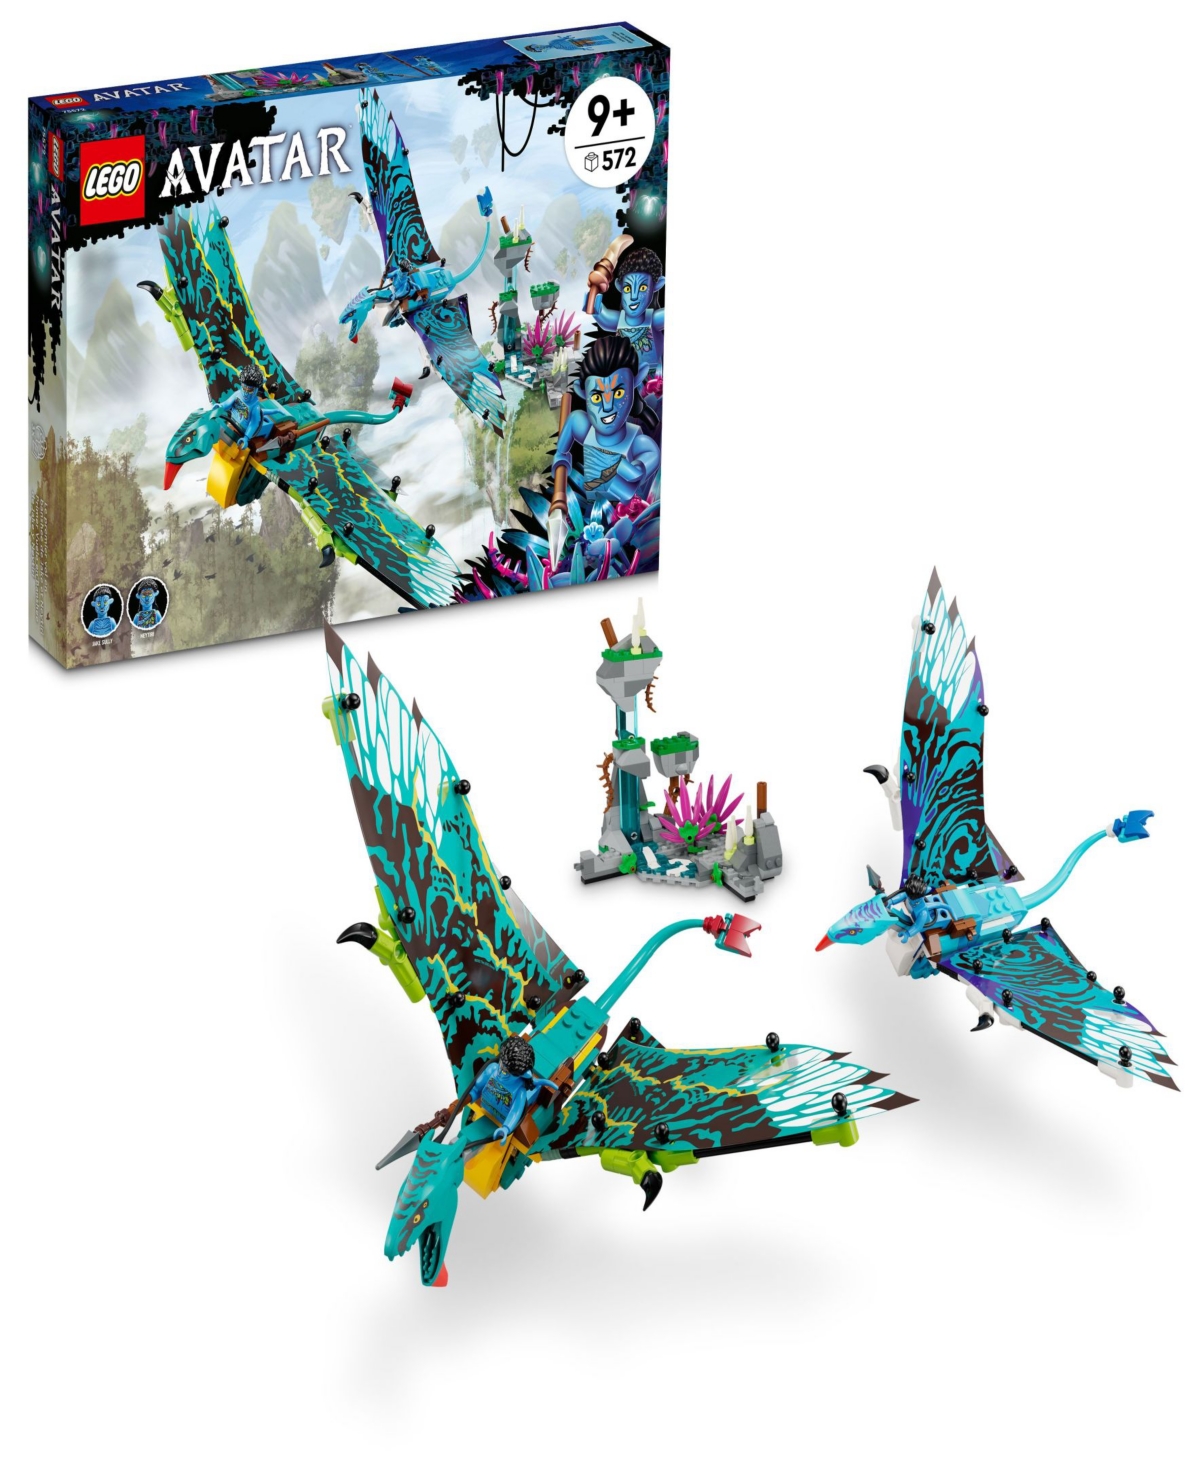 Lego Avatar Jake Neytiri's First Banshee Flight 75572 Toy Building Set In Multicolor